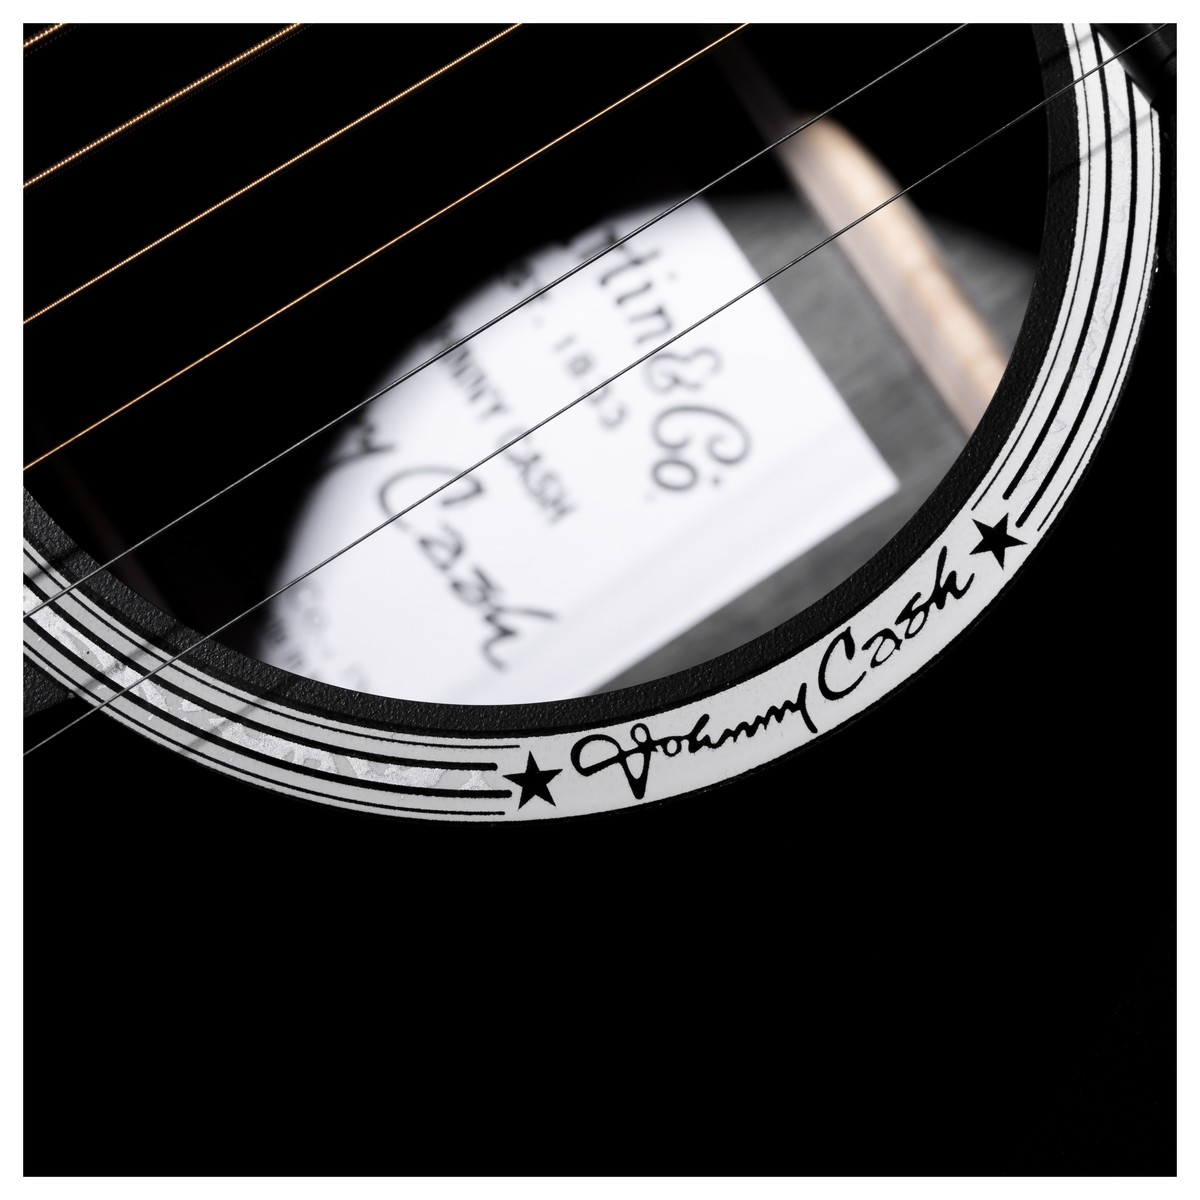 Martin Johnny Cash Dx Signature Dreadnought Hpl Ric - Black - Elektroakustische Gitarre - Variation 3